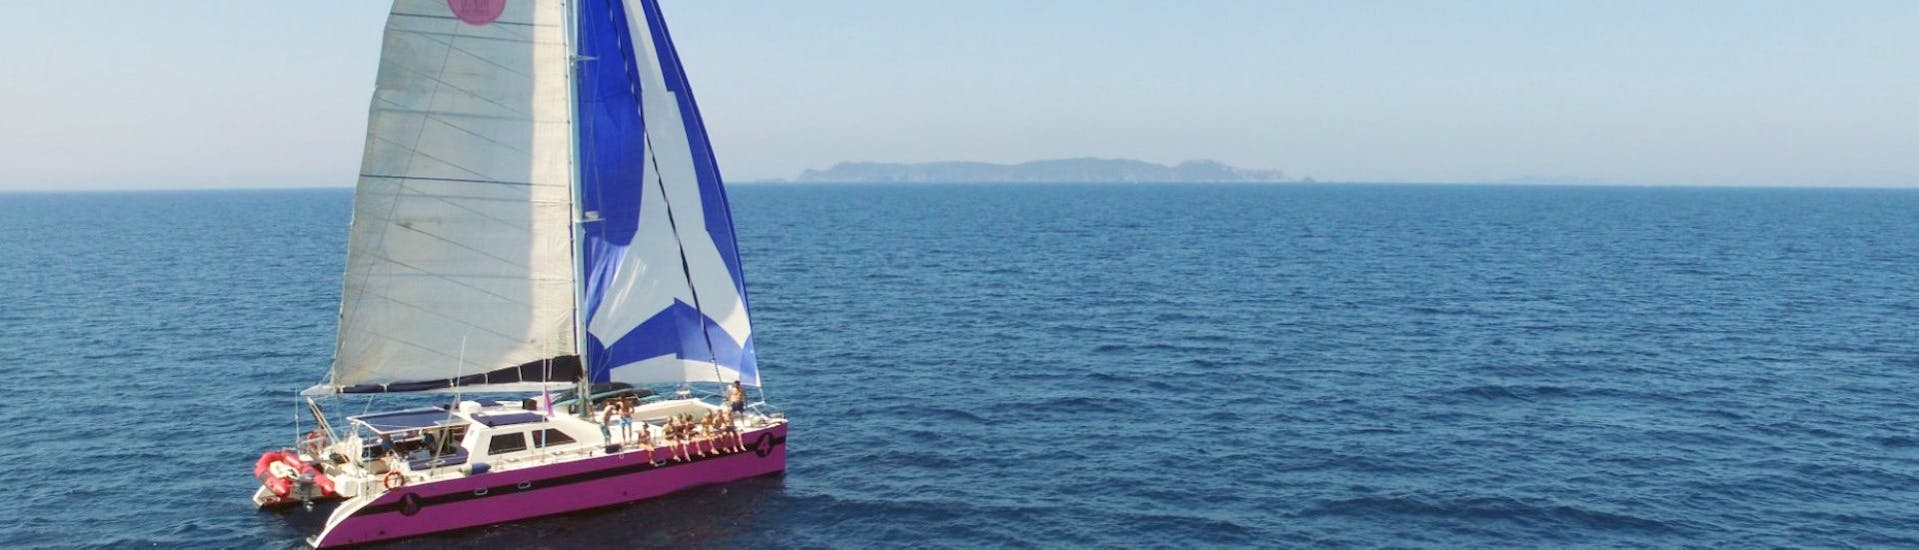 Vue lors de la Balade en catamaran festive dans le golf de Saint-Tropez avec Caseneuve Maxi Catamaran.